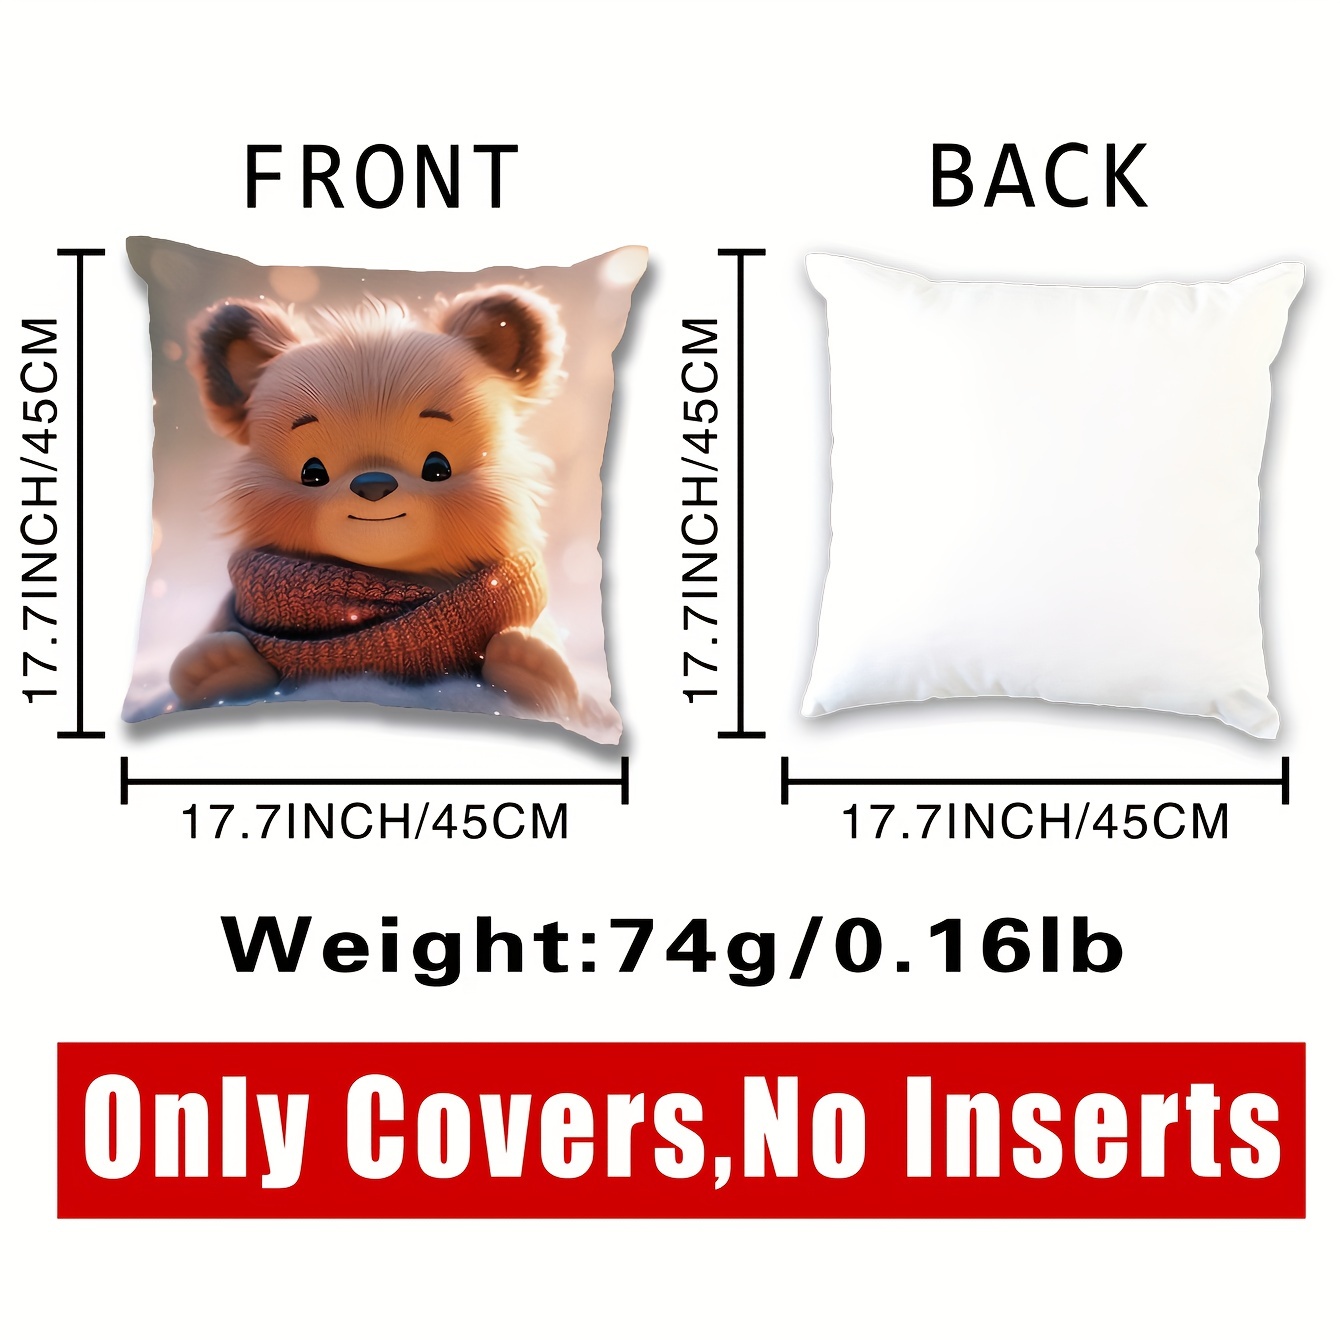 Bear Decorative Bed Pillows